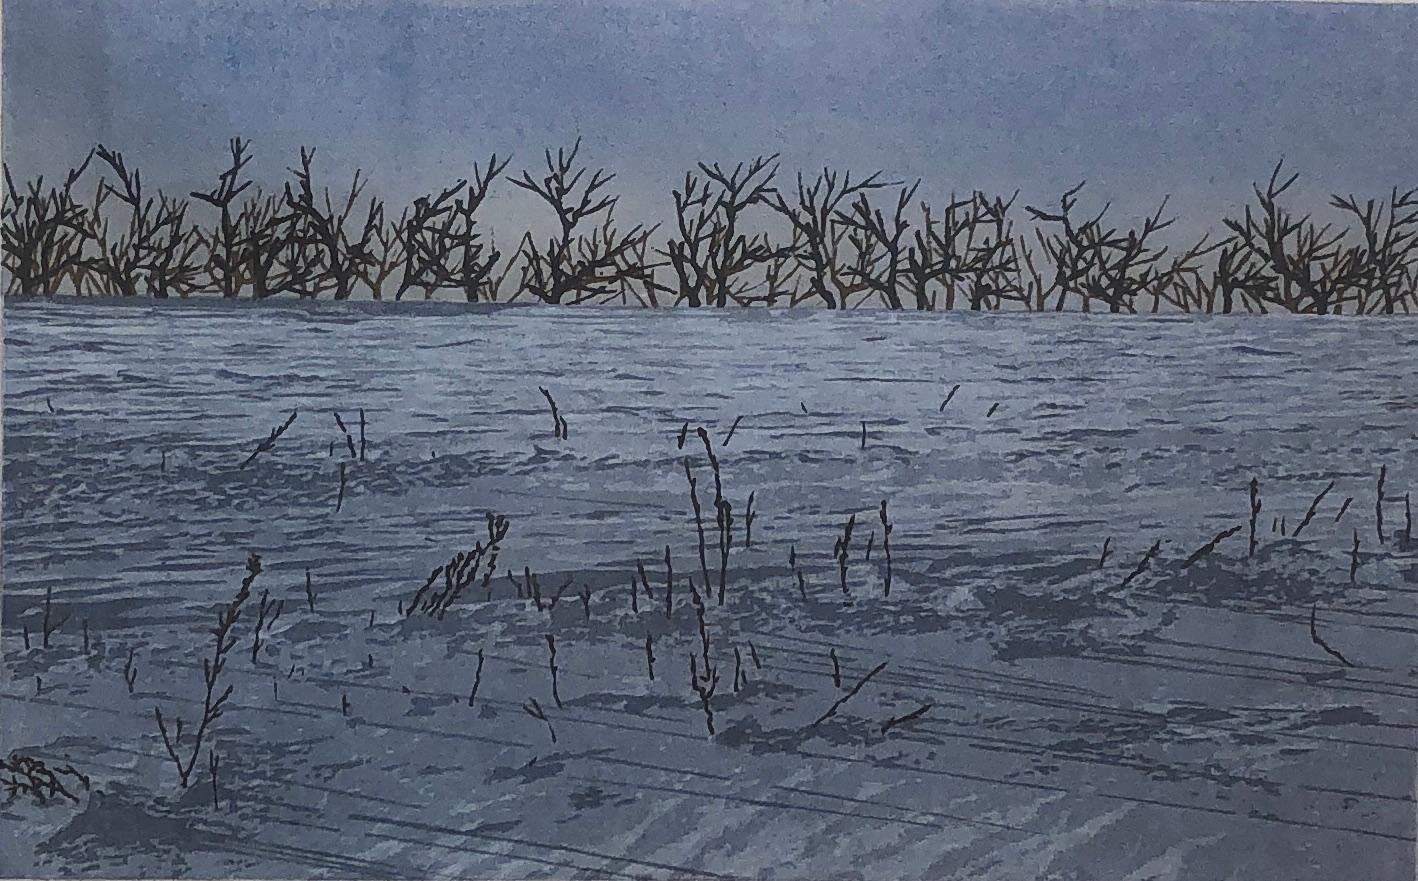 Sommesso II, blue and gray Ukiyo-e landscape woodblock print, 2016